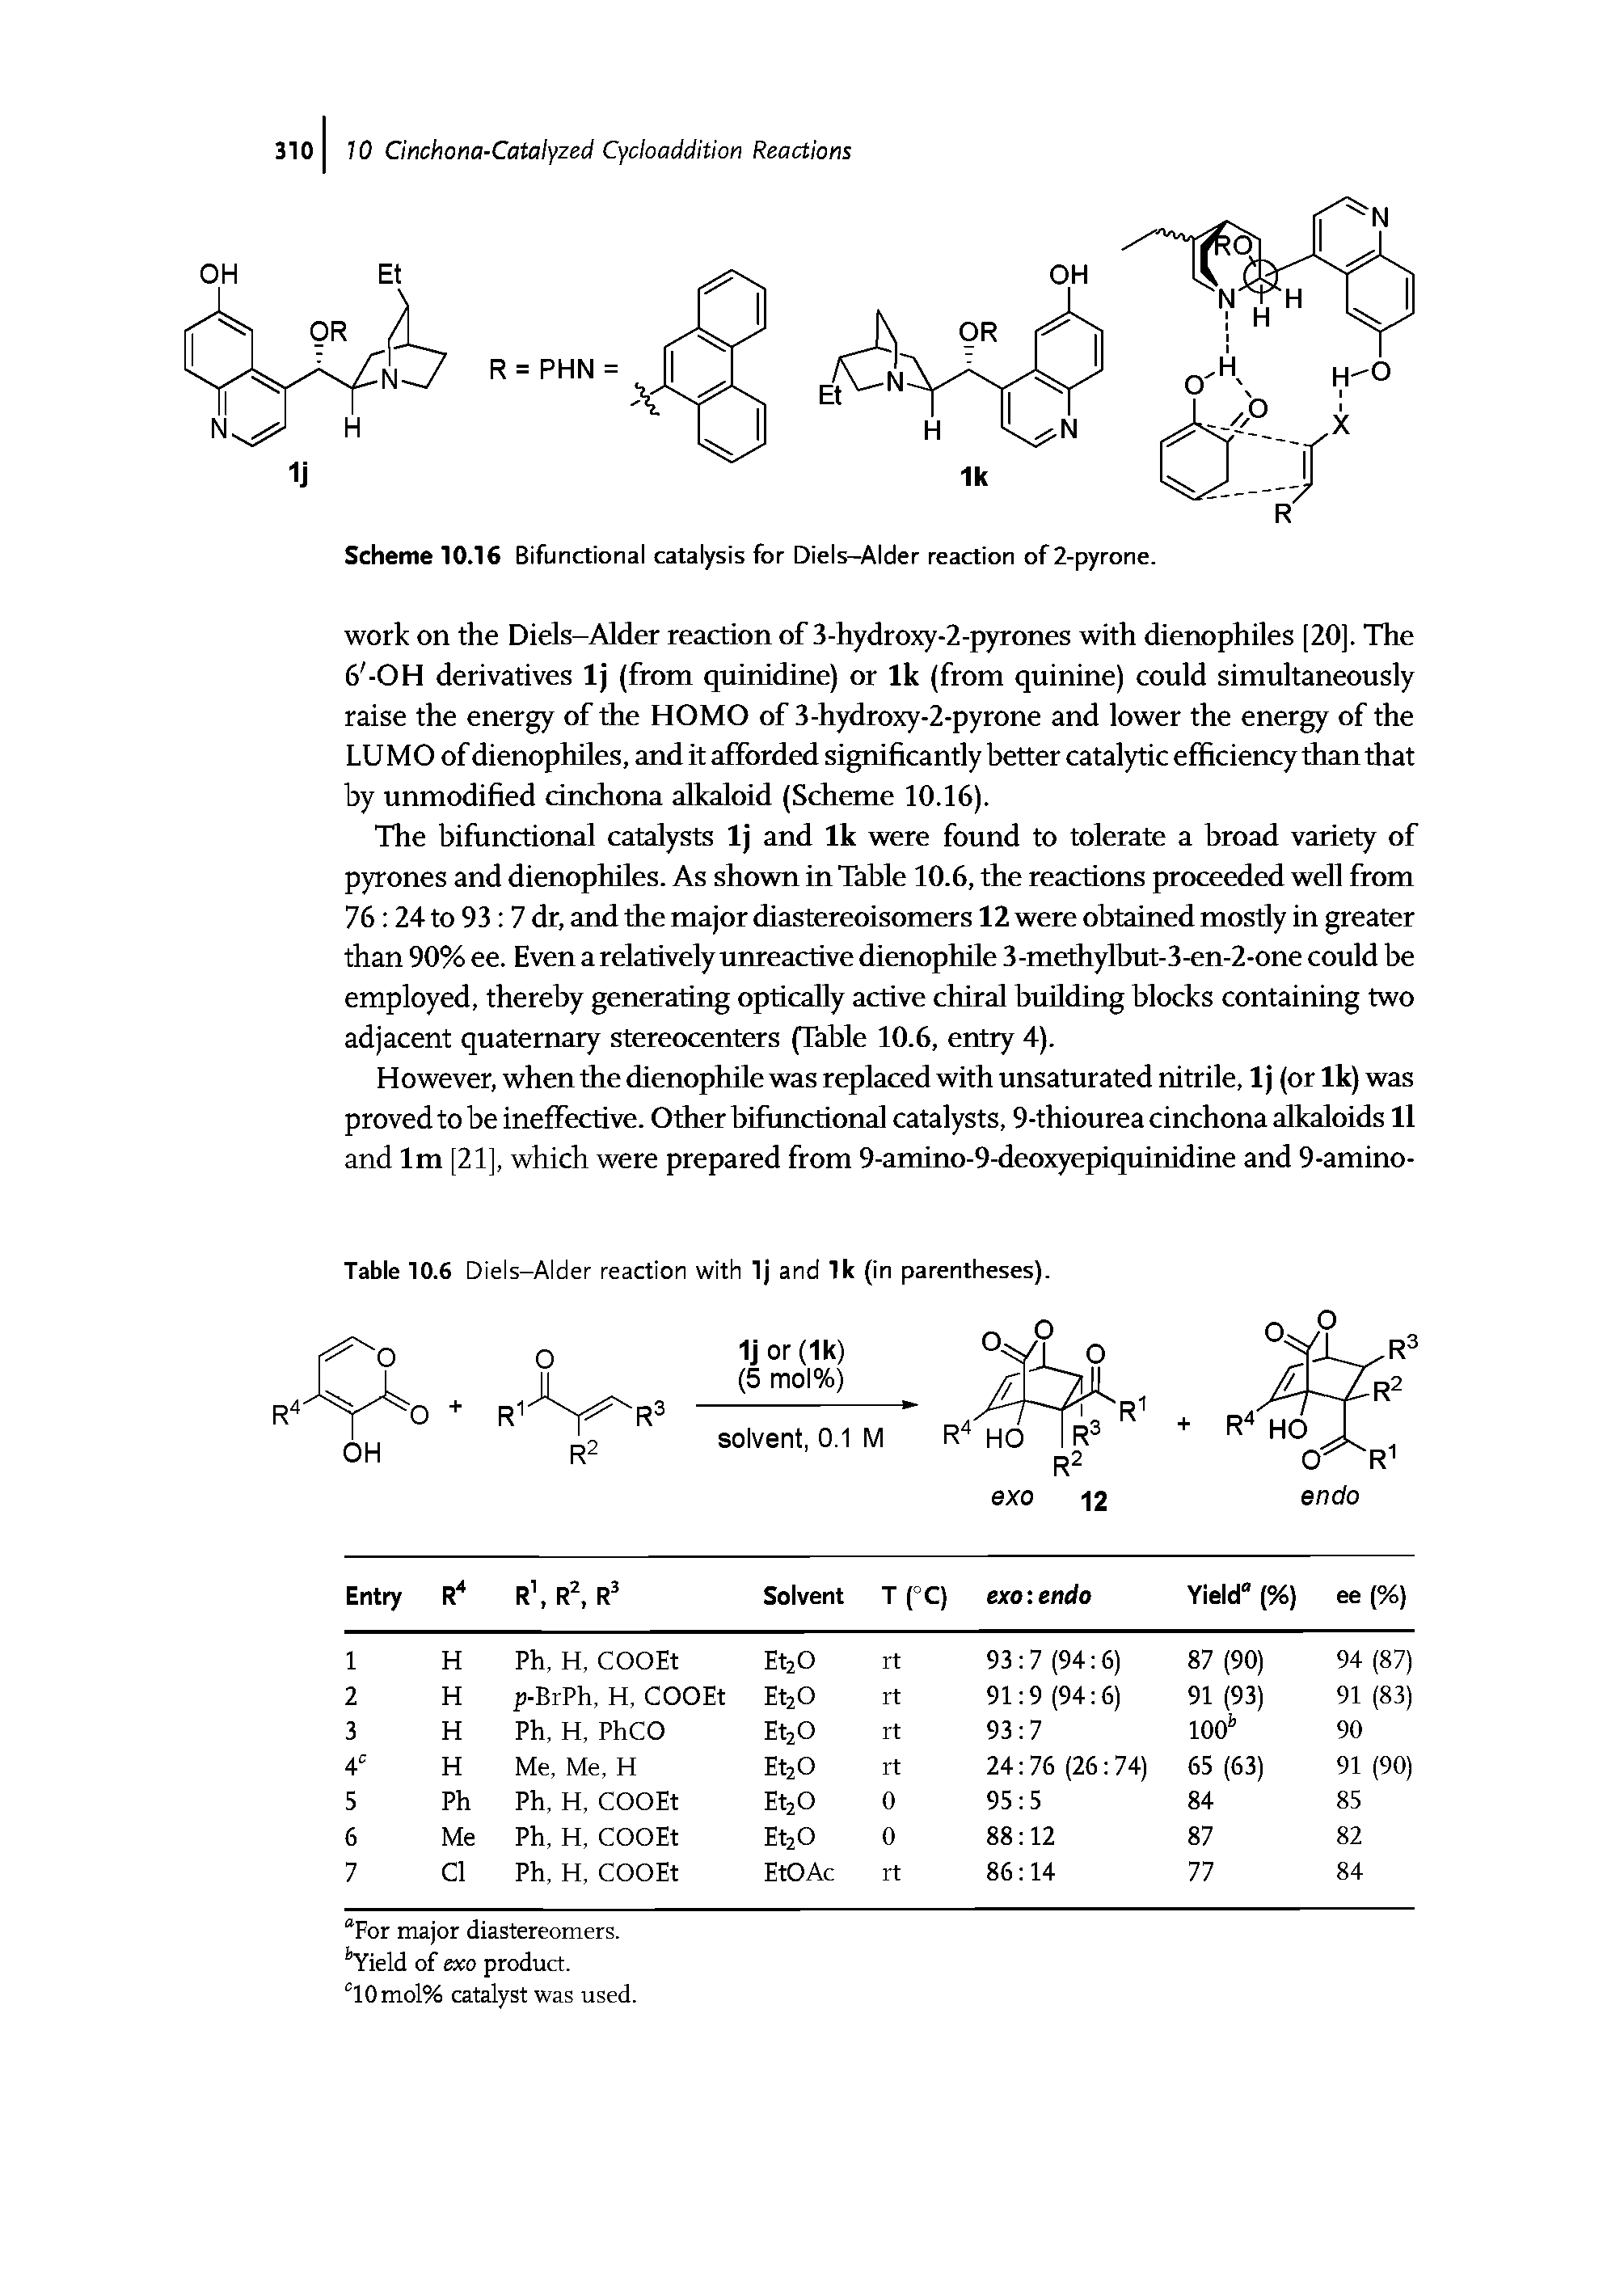 Scheme 10.16 Bifunctional catalysis for Diels-Alder reaction of 2-pyrone.